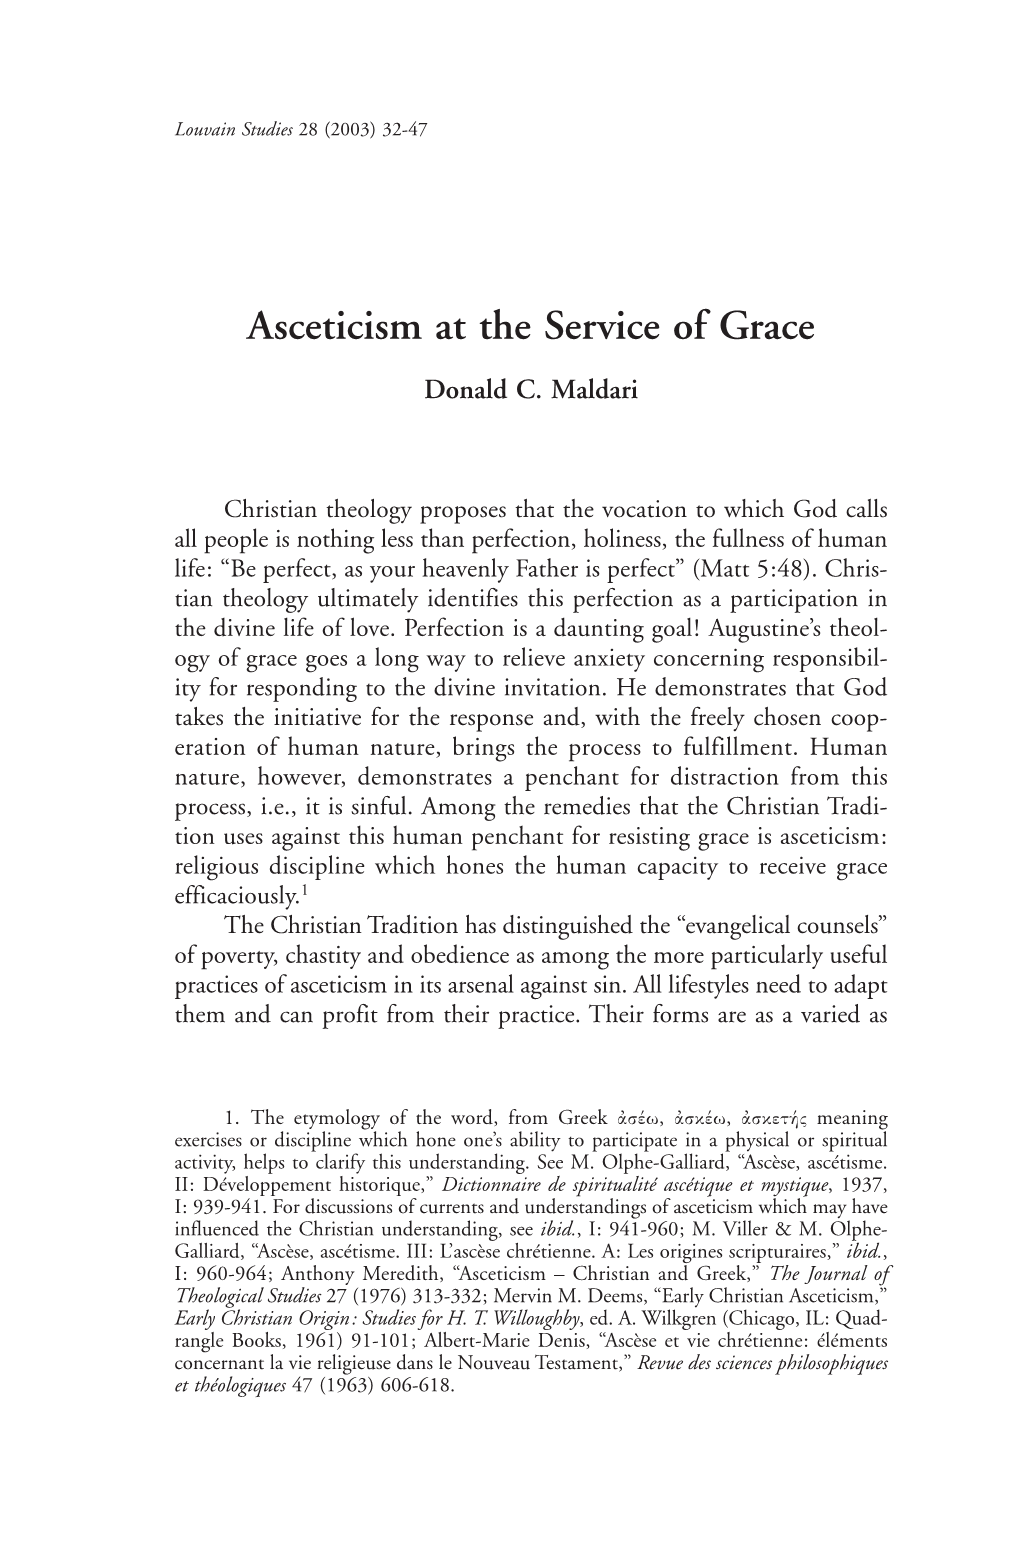 Asceticism at the Service of Grace Donald C